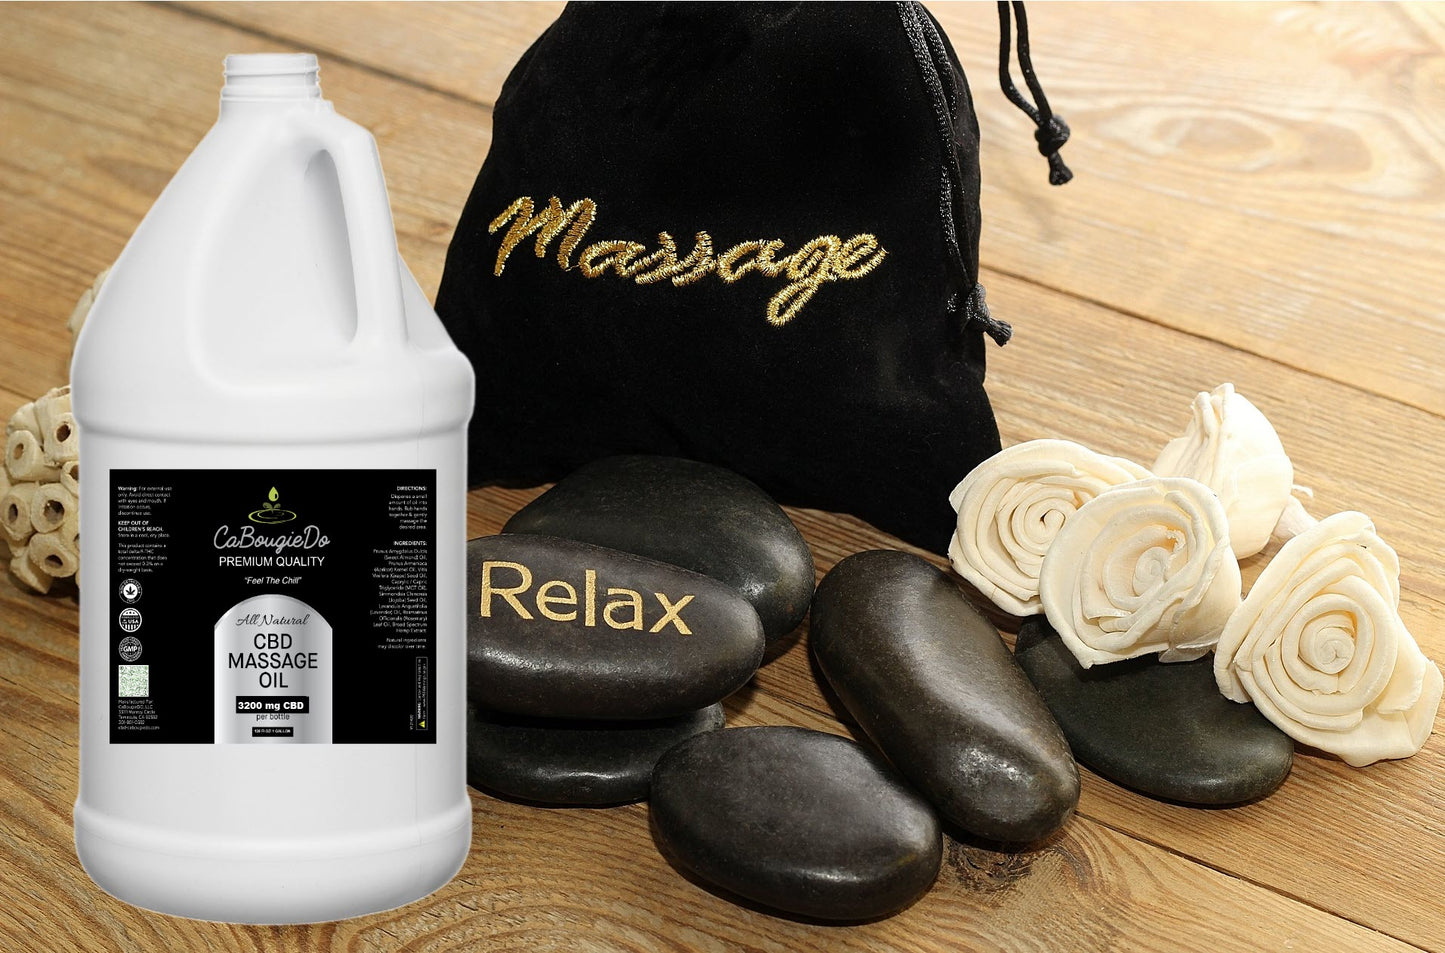 CaBougieDo Massage Oil with 3200 mg CBD - Gallon jug